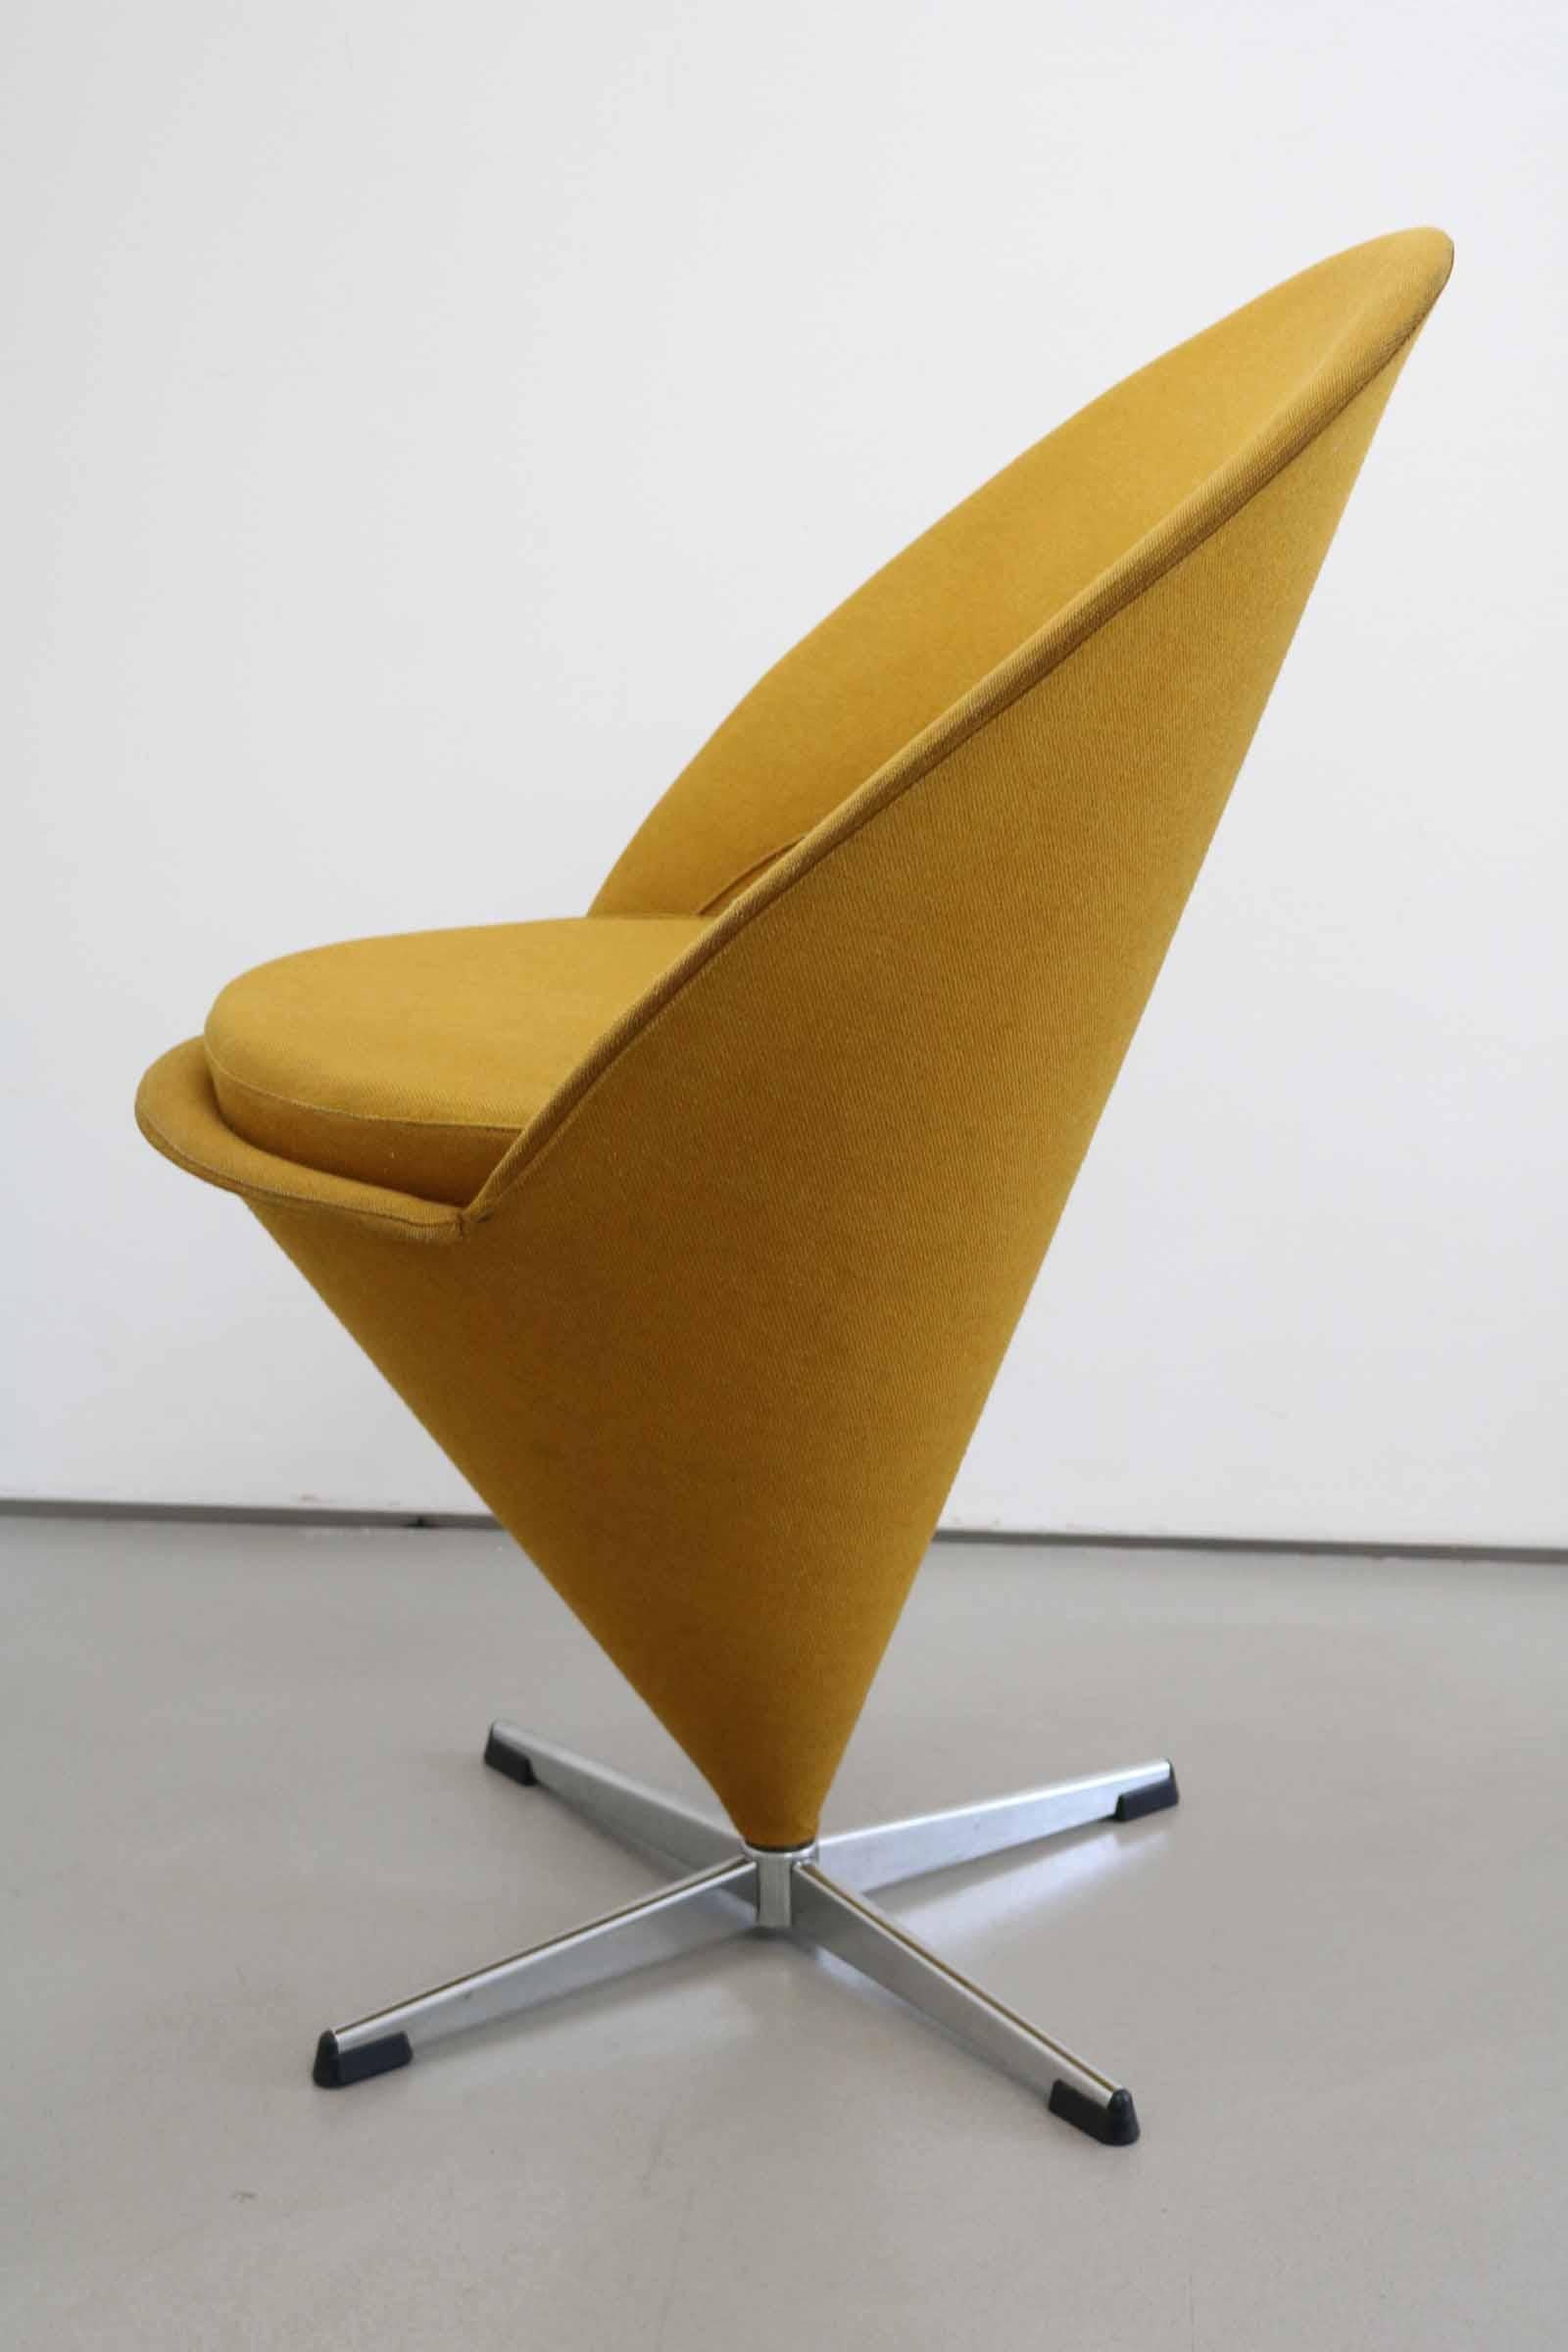 Verner Panton Mustard Yellow Cone Chair in Original Fabric, Denmark, 1960s In Good Condition For Sale In Berlin, DE